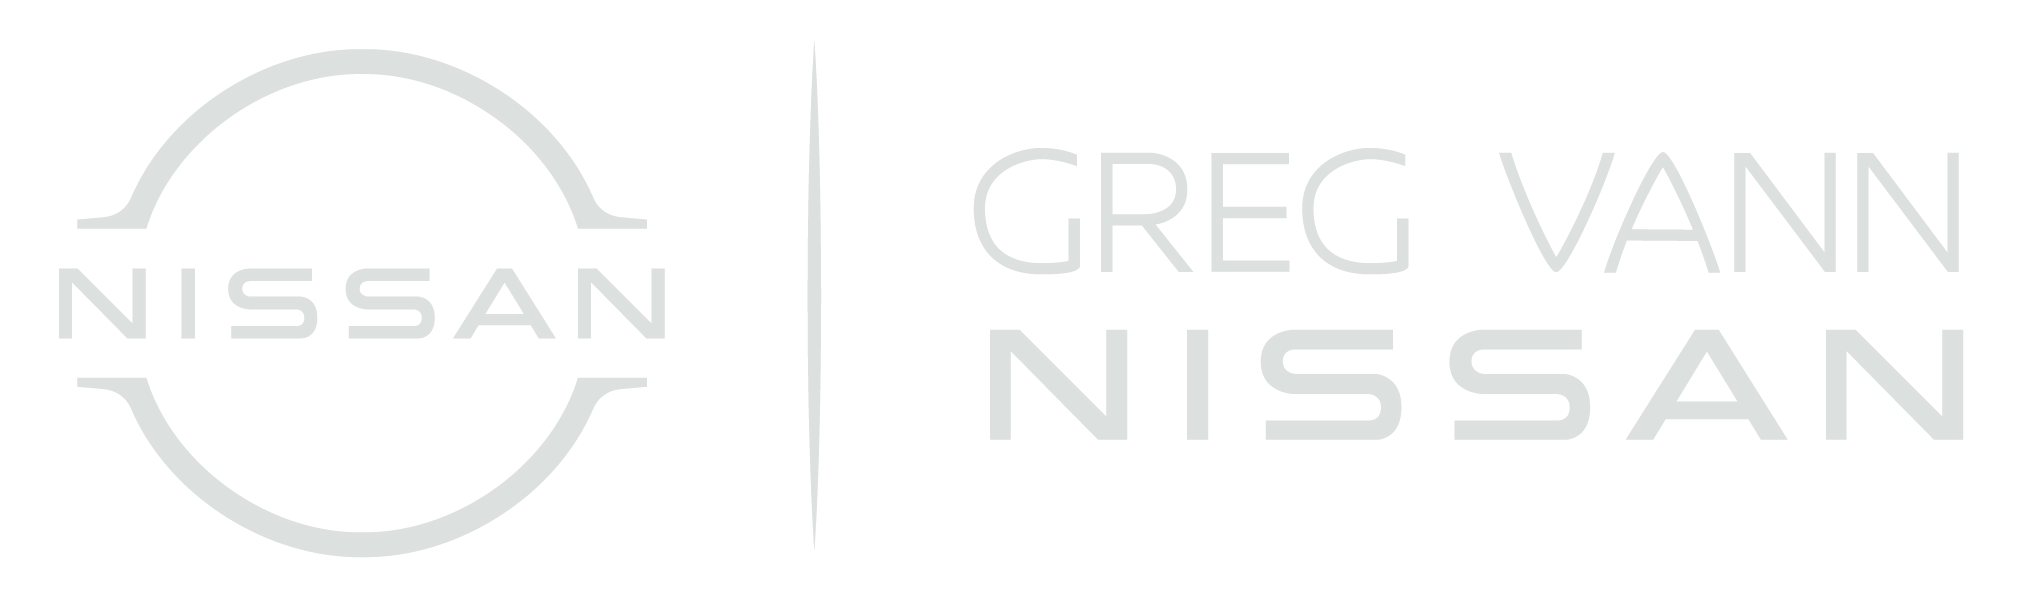 Greg Vann Nissan logo